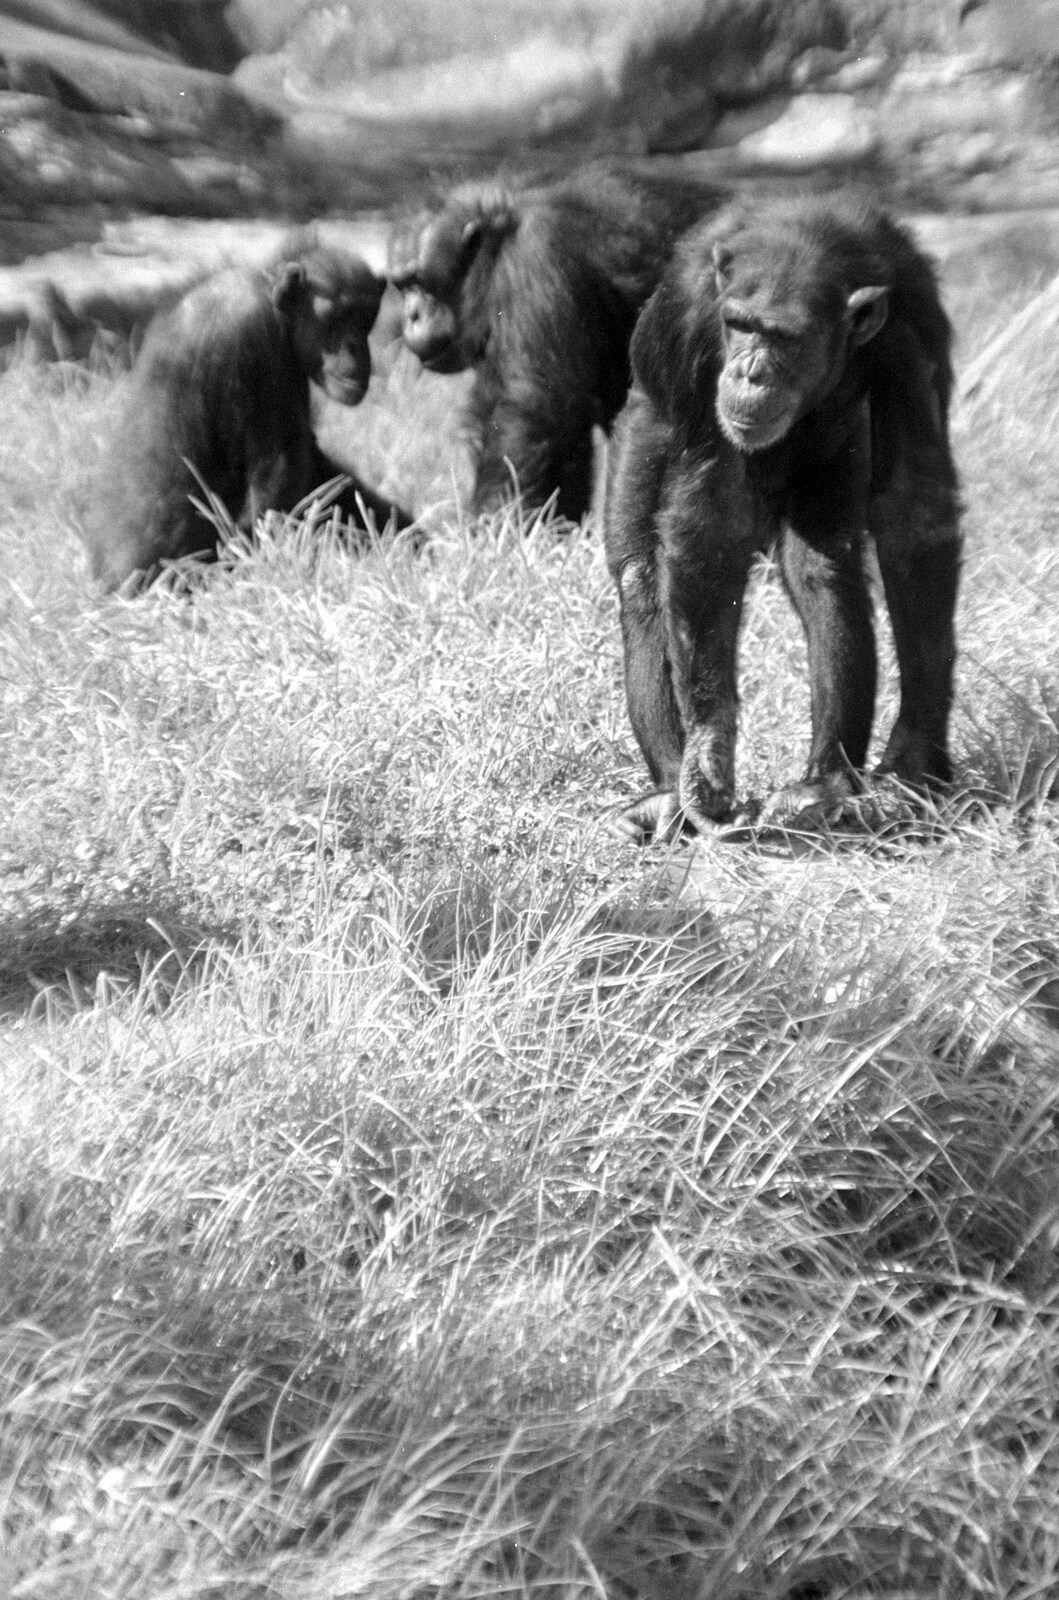 Chimpanzees roam around from A Trip to the Zoo, Sydney, Australia - 7th April 2000